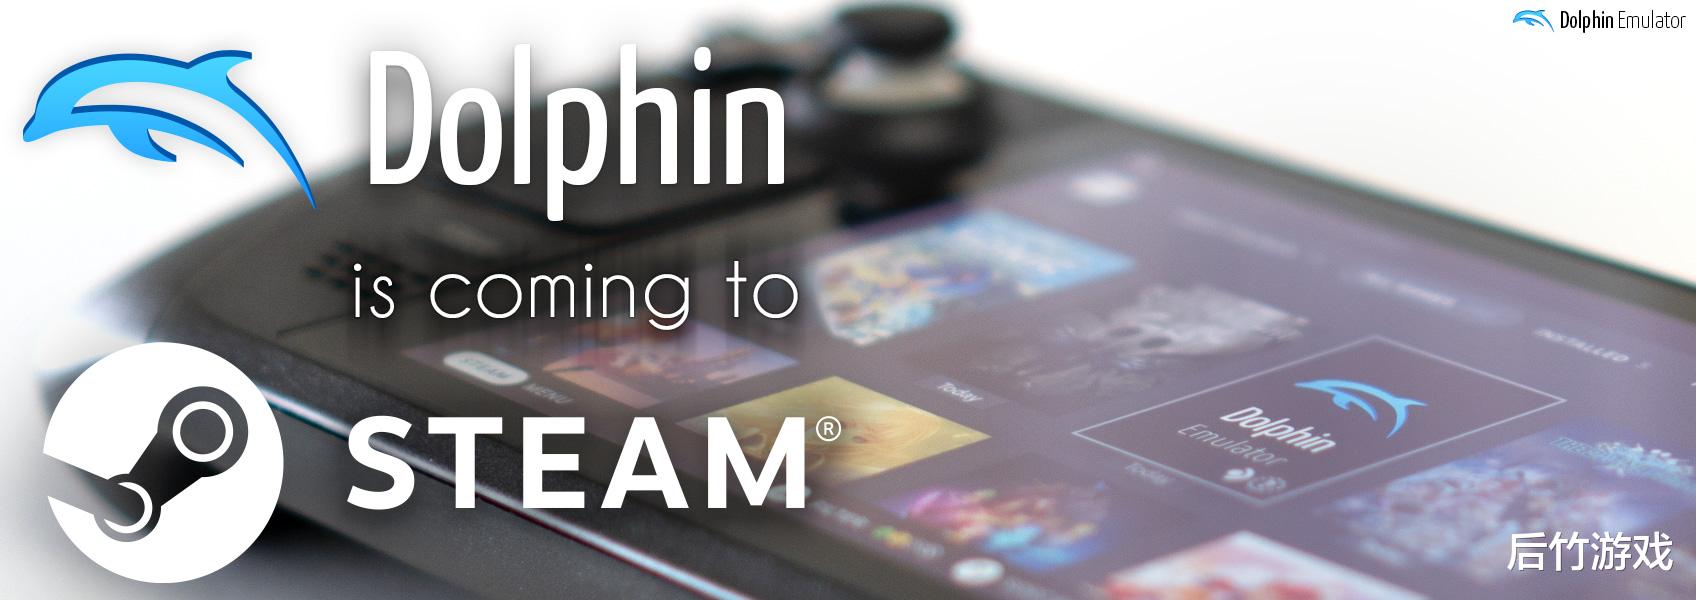 著名NGC和Wii模拟器Dolphin即将发行Steam版本